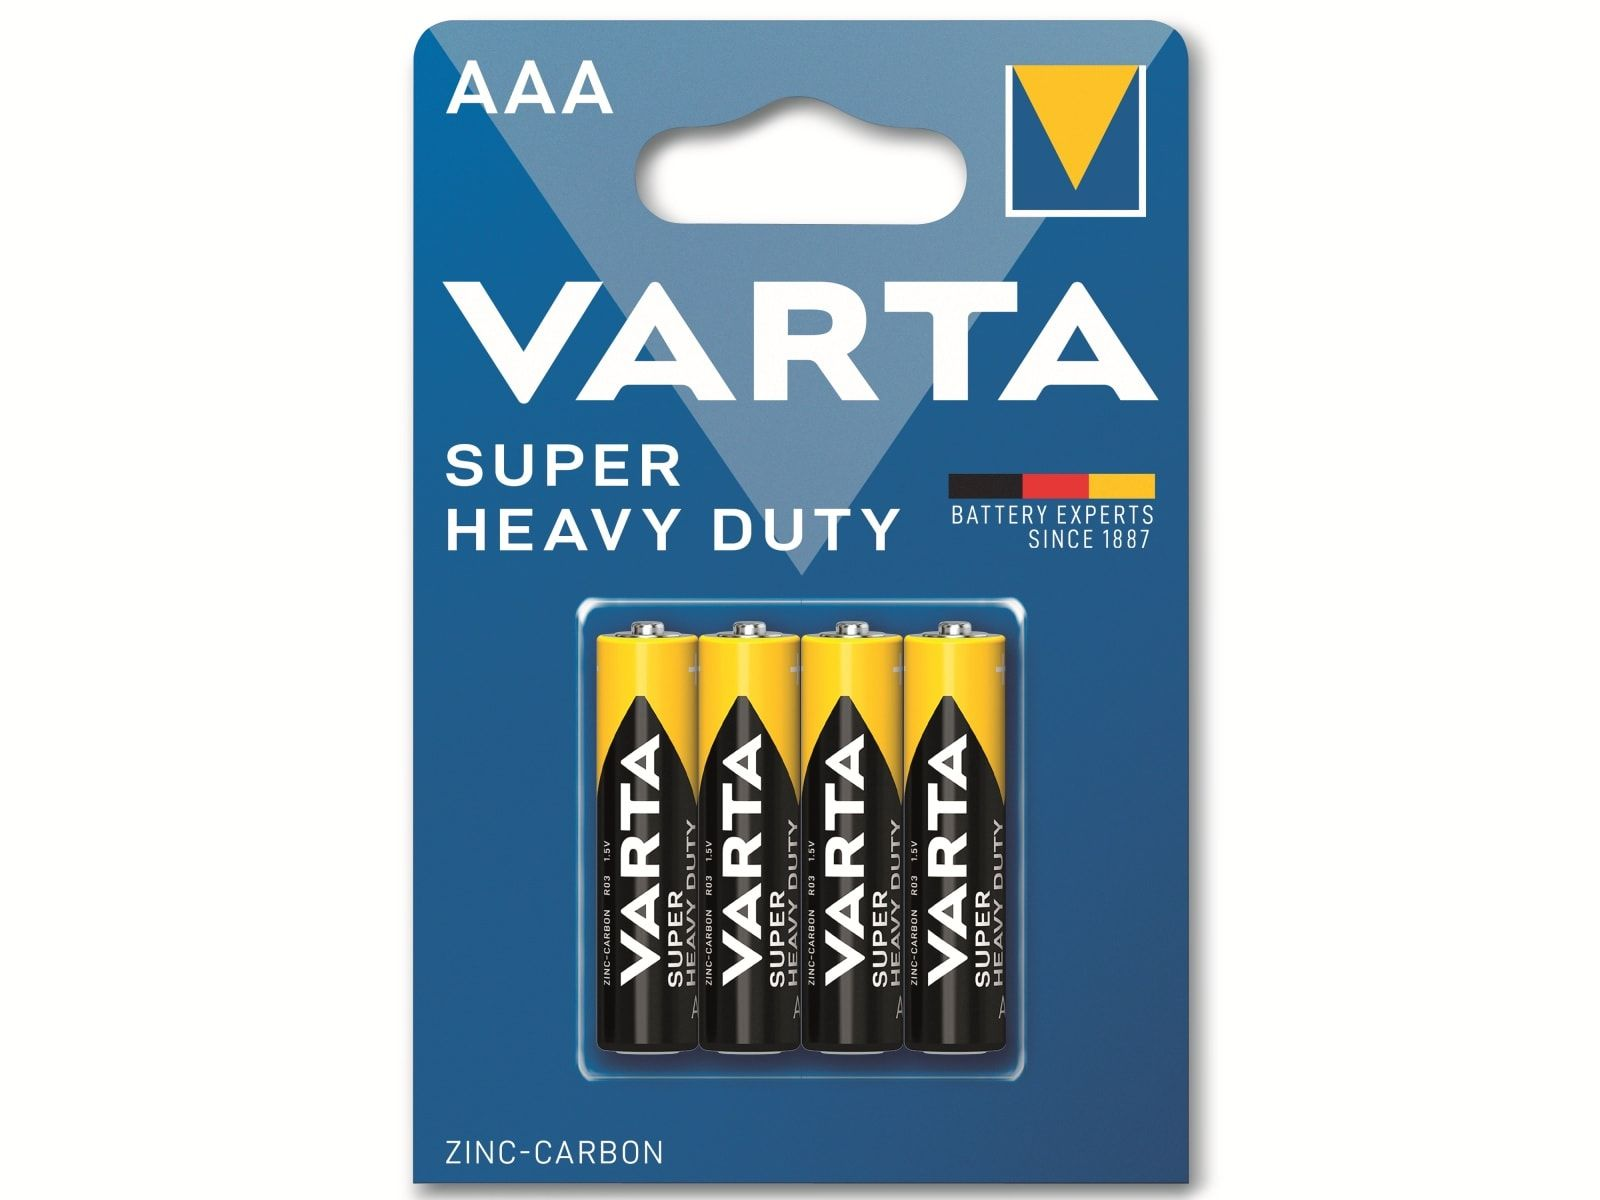 VARTA Batterie Zink-Kohle, AAA, Stück Zink-Kohle 4 R03, 1.5V, Micro, Superlife, Batterie